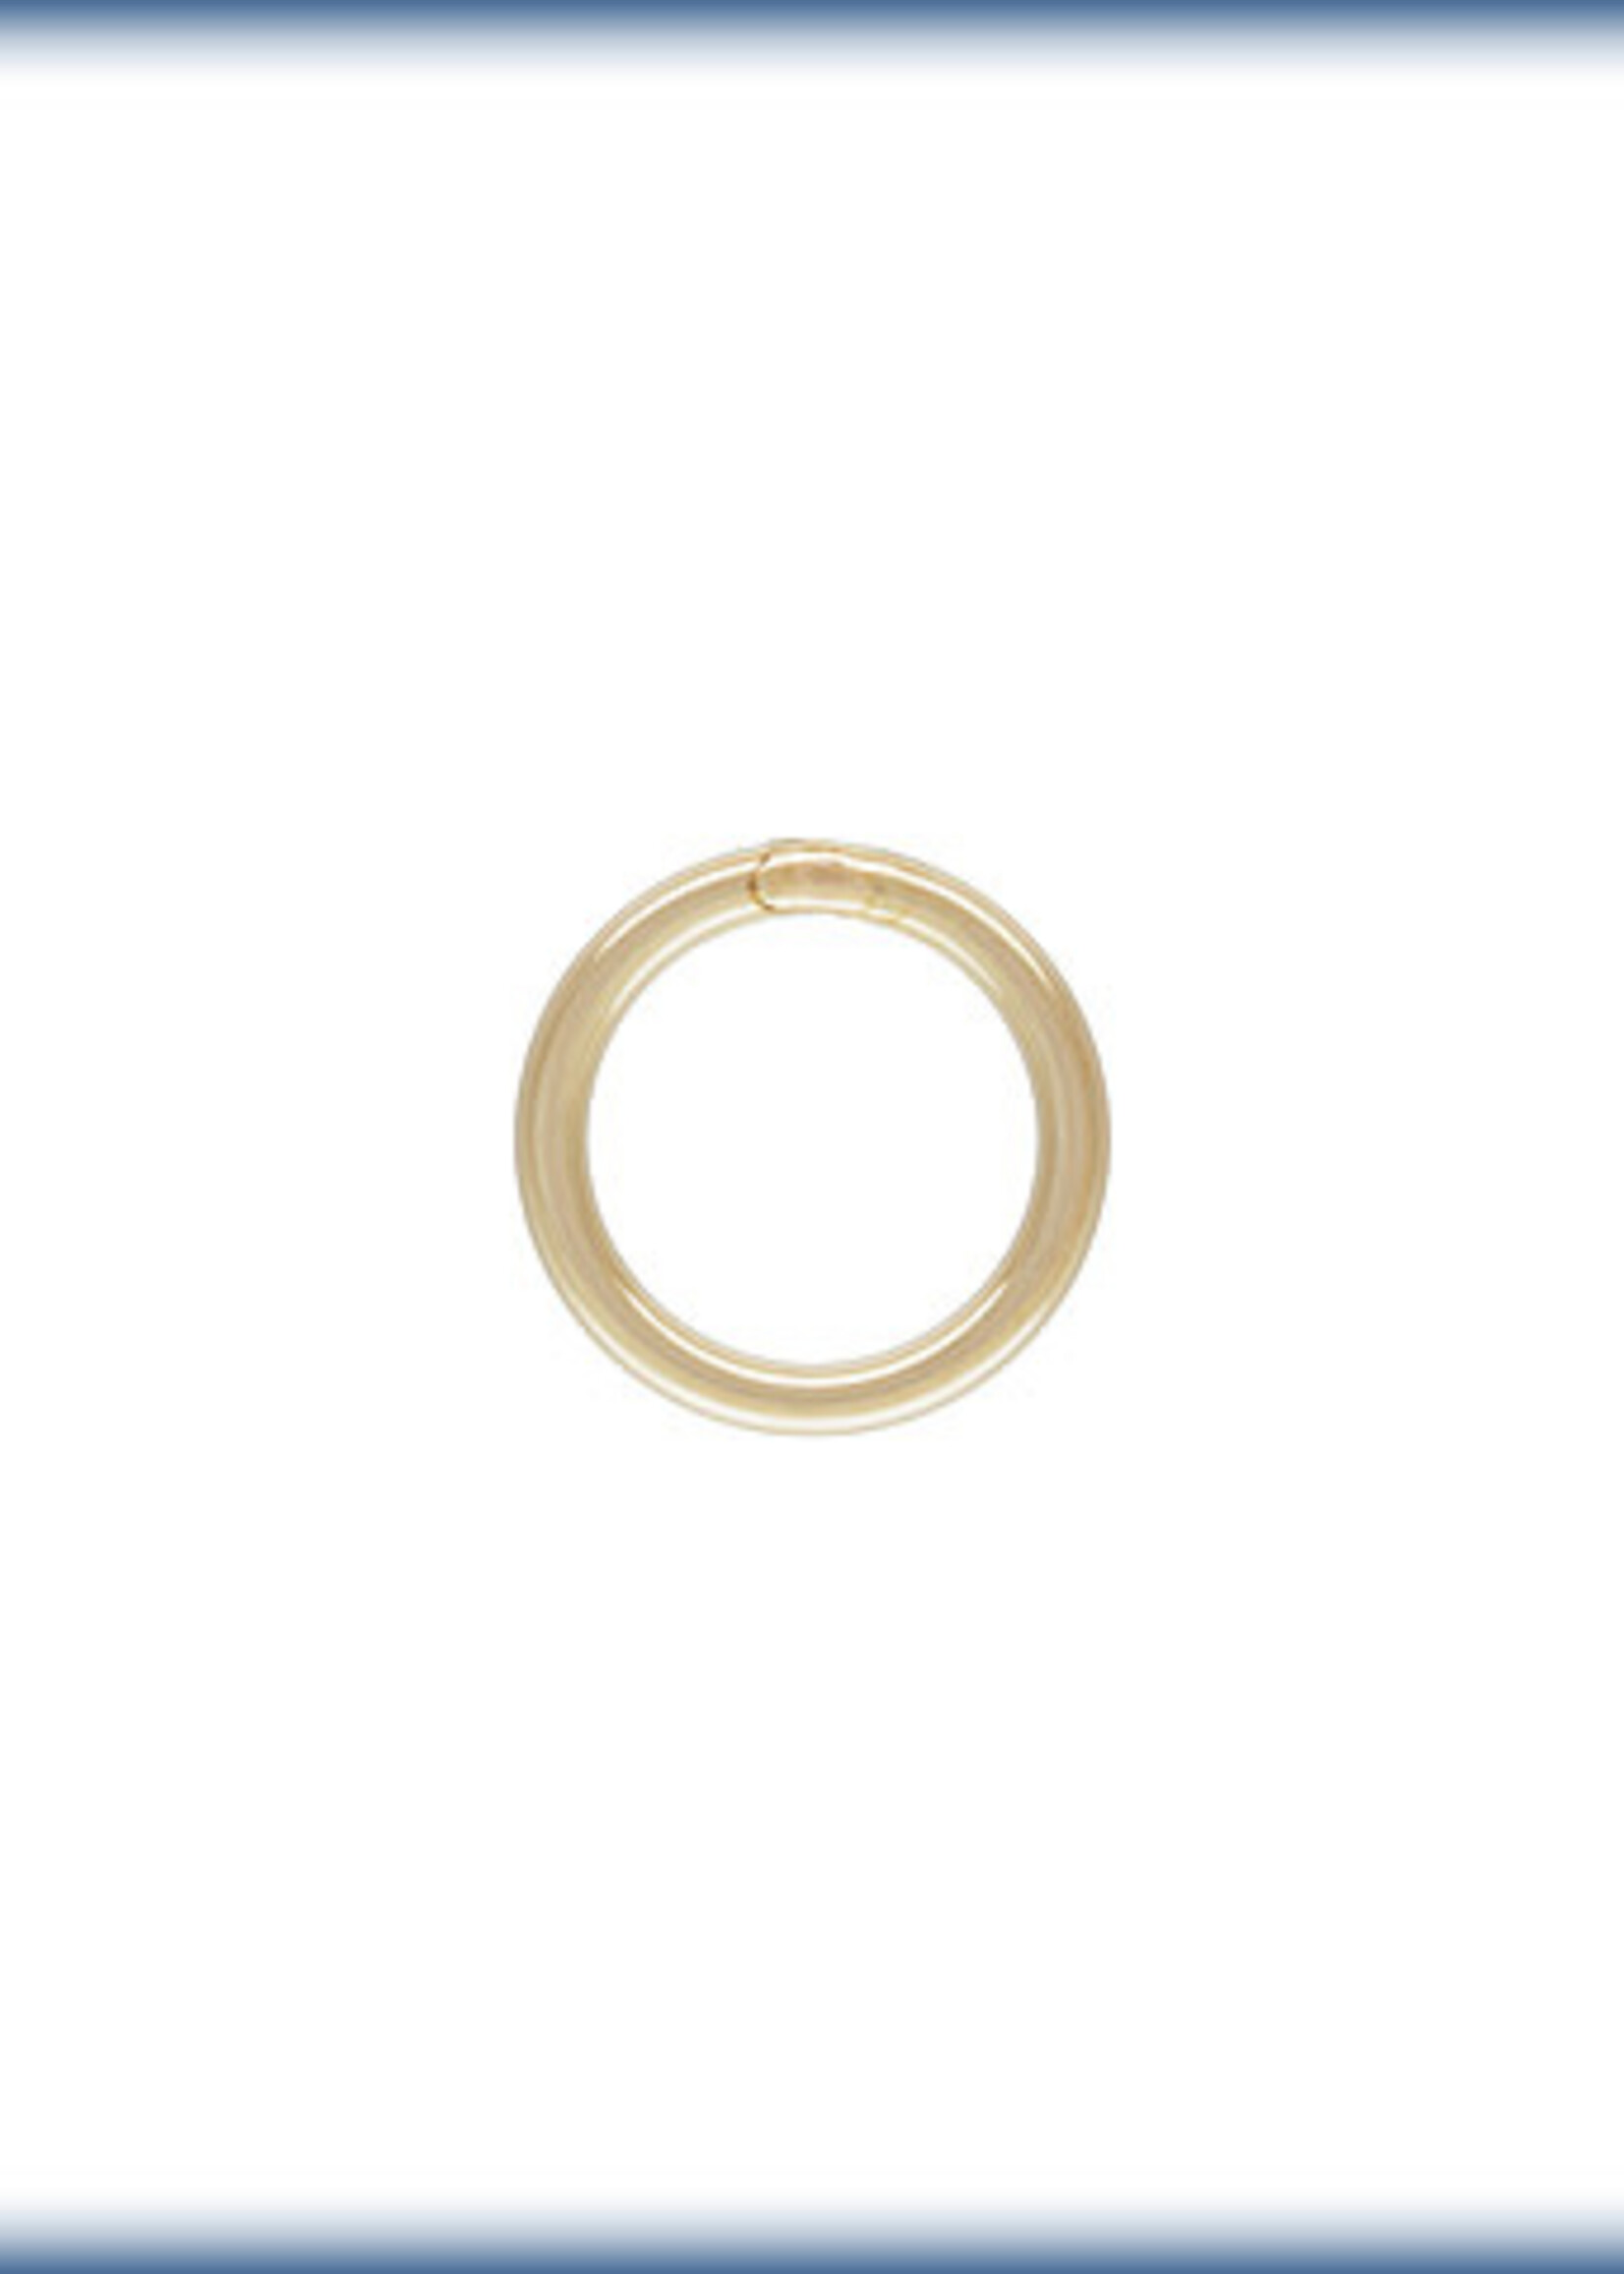 5mm Closed Ring 22 ga Gold Filled Qty 10